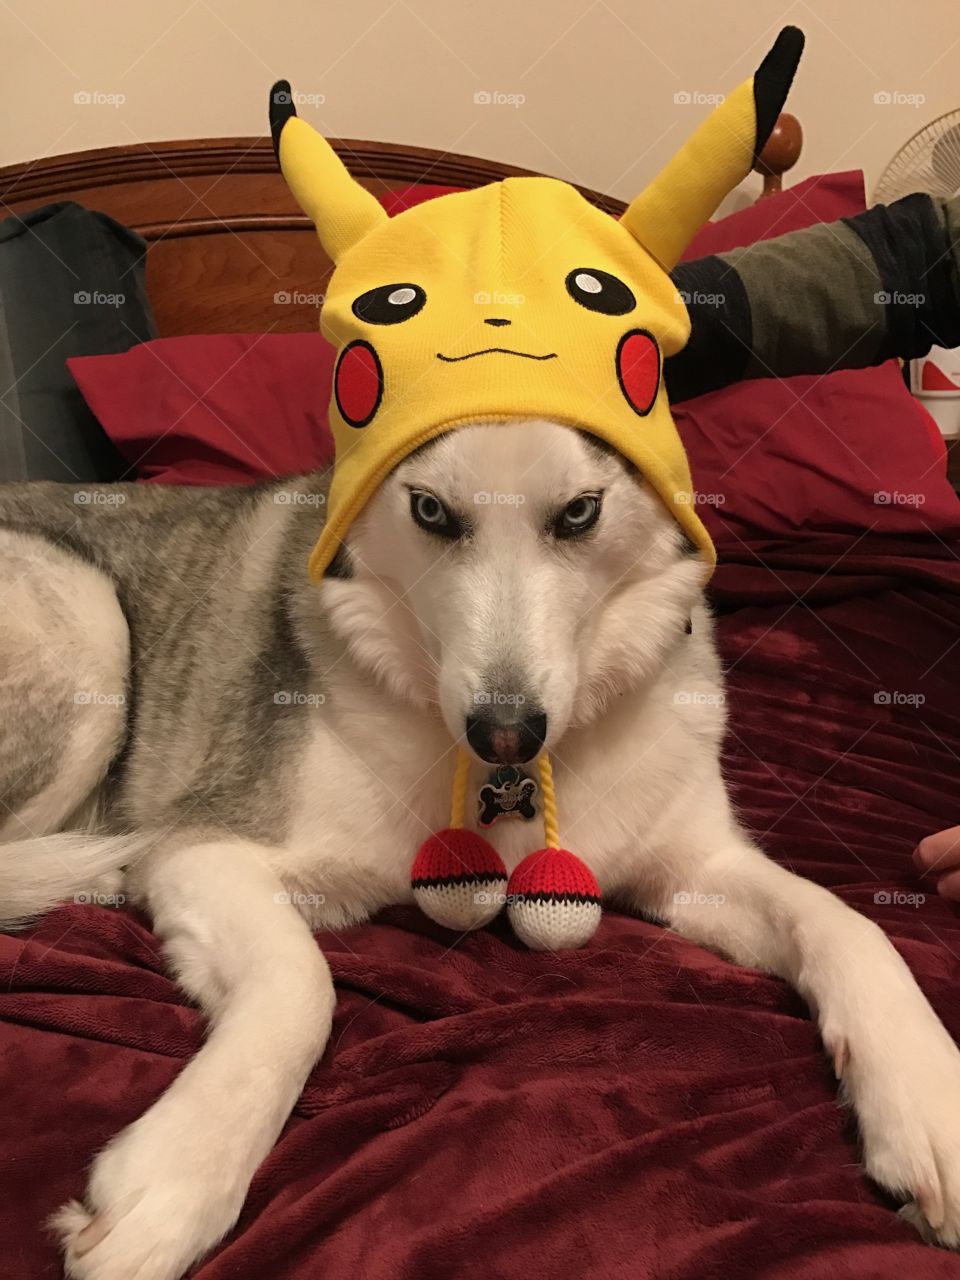 Orion wearing a Pikachu hat